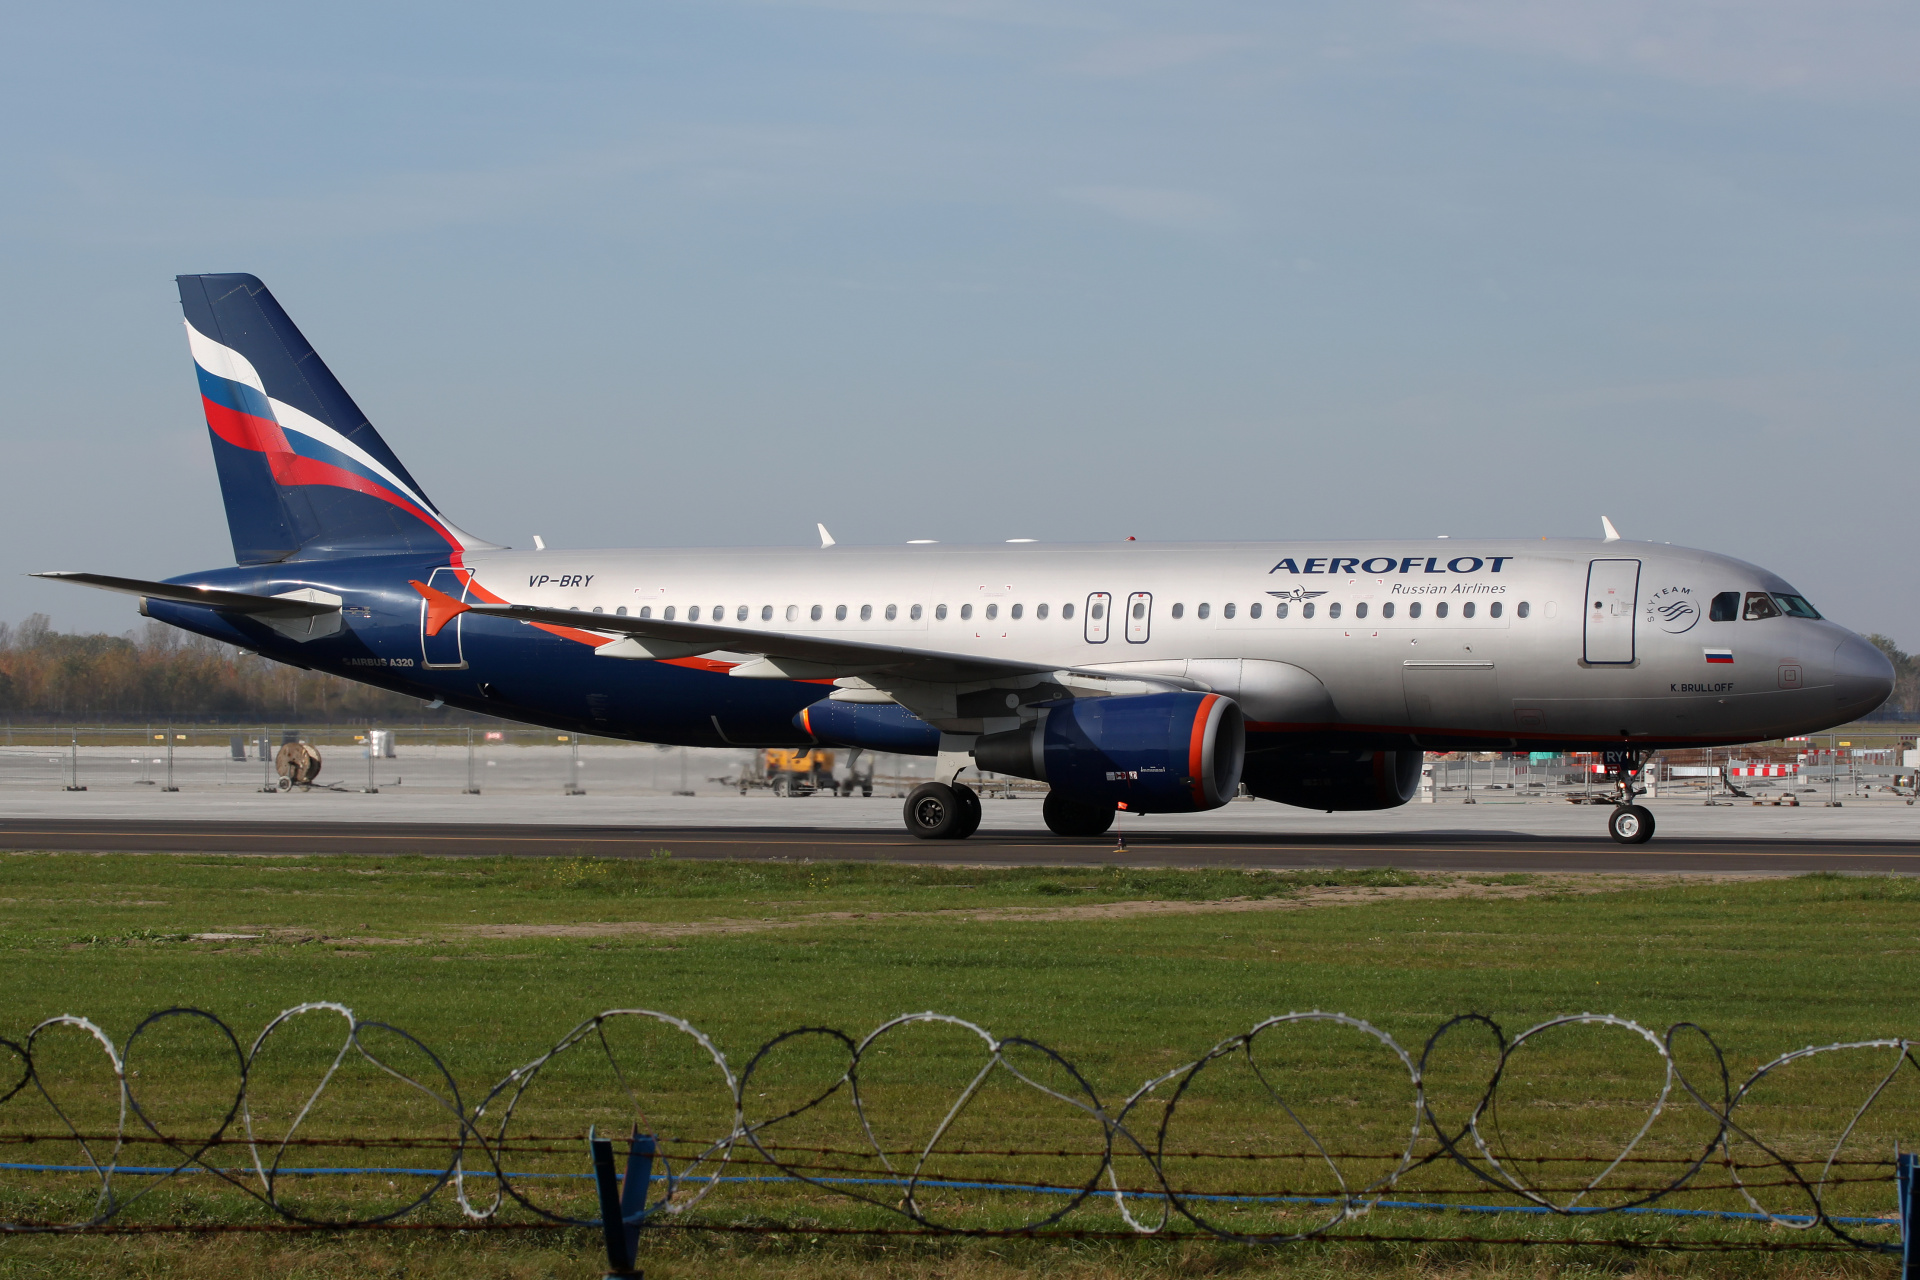 VP-BRY (Aircraft » EPWA Spotting » Airbus A320-200 » Aeroflot Russian Airlines)